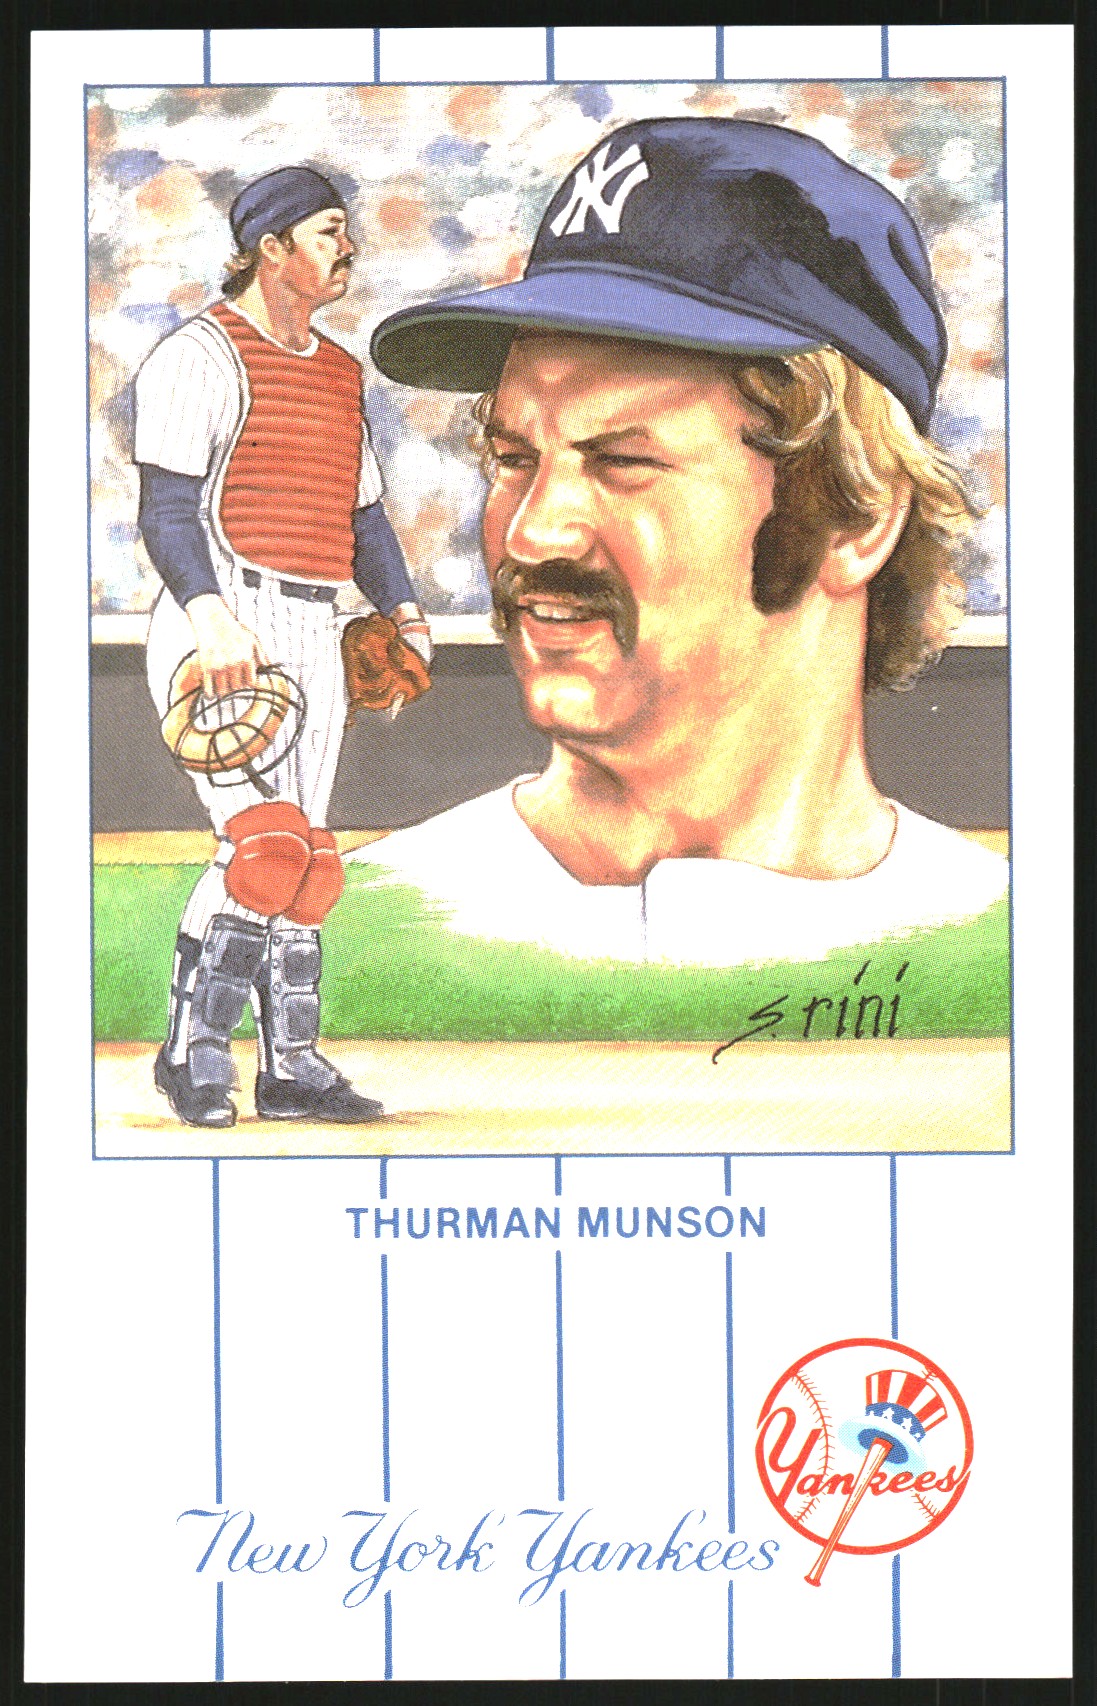 1990 Rini Postcards Munson #7 Thurman Munson/(Standing, with/catcher's uniform